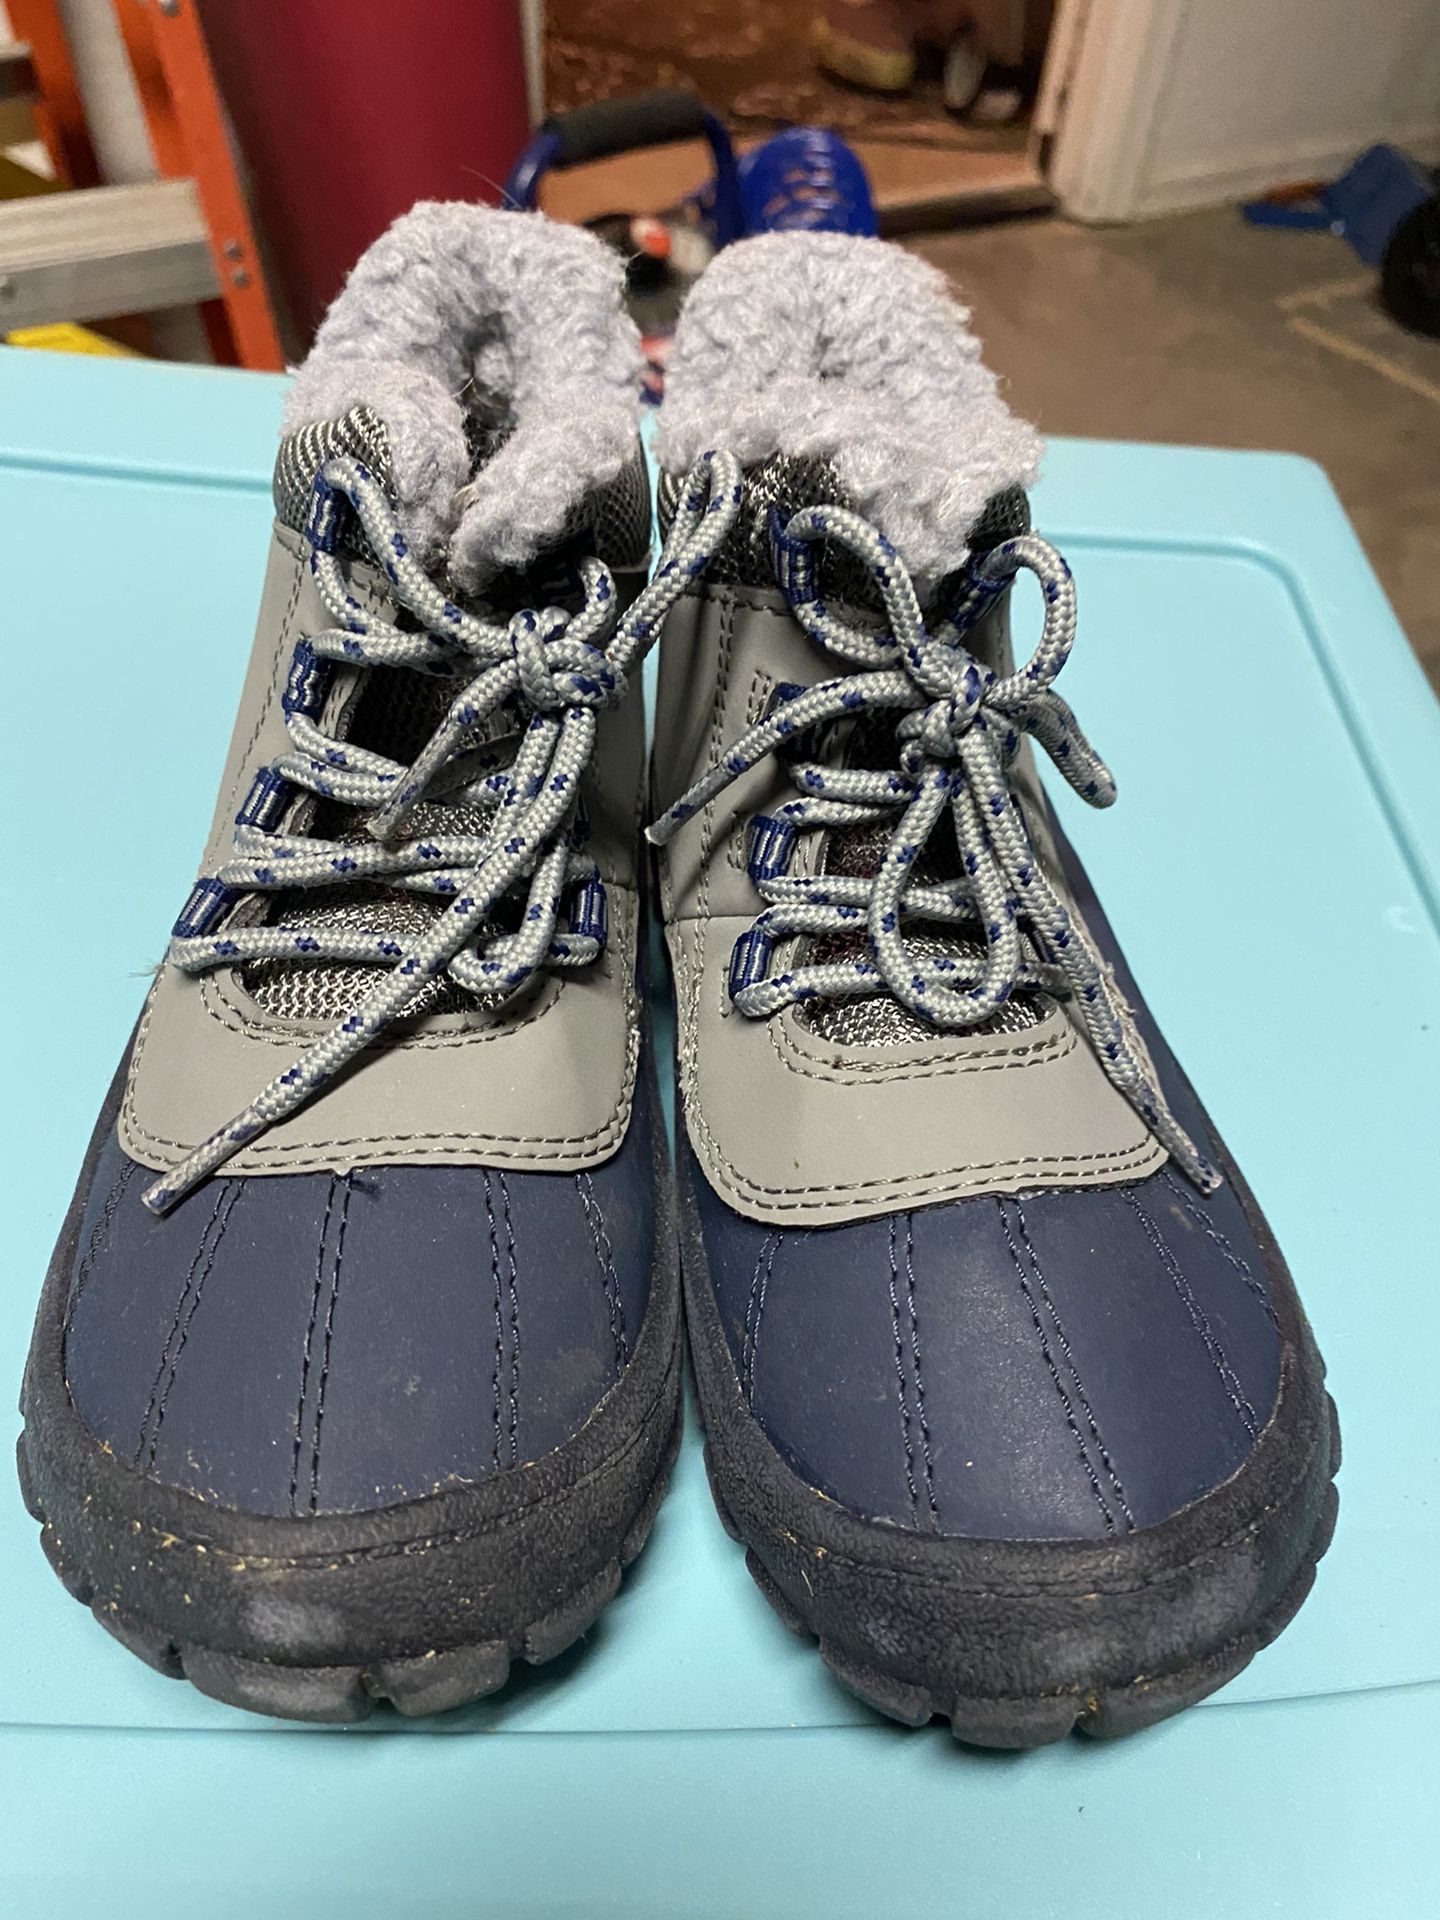 Waterproof boots.